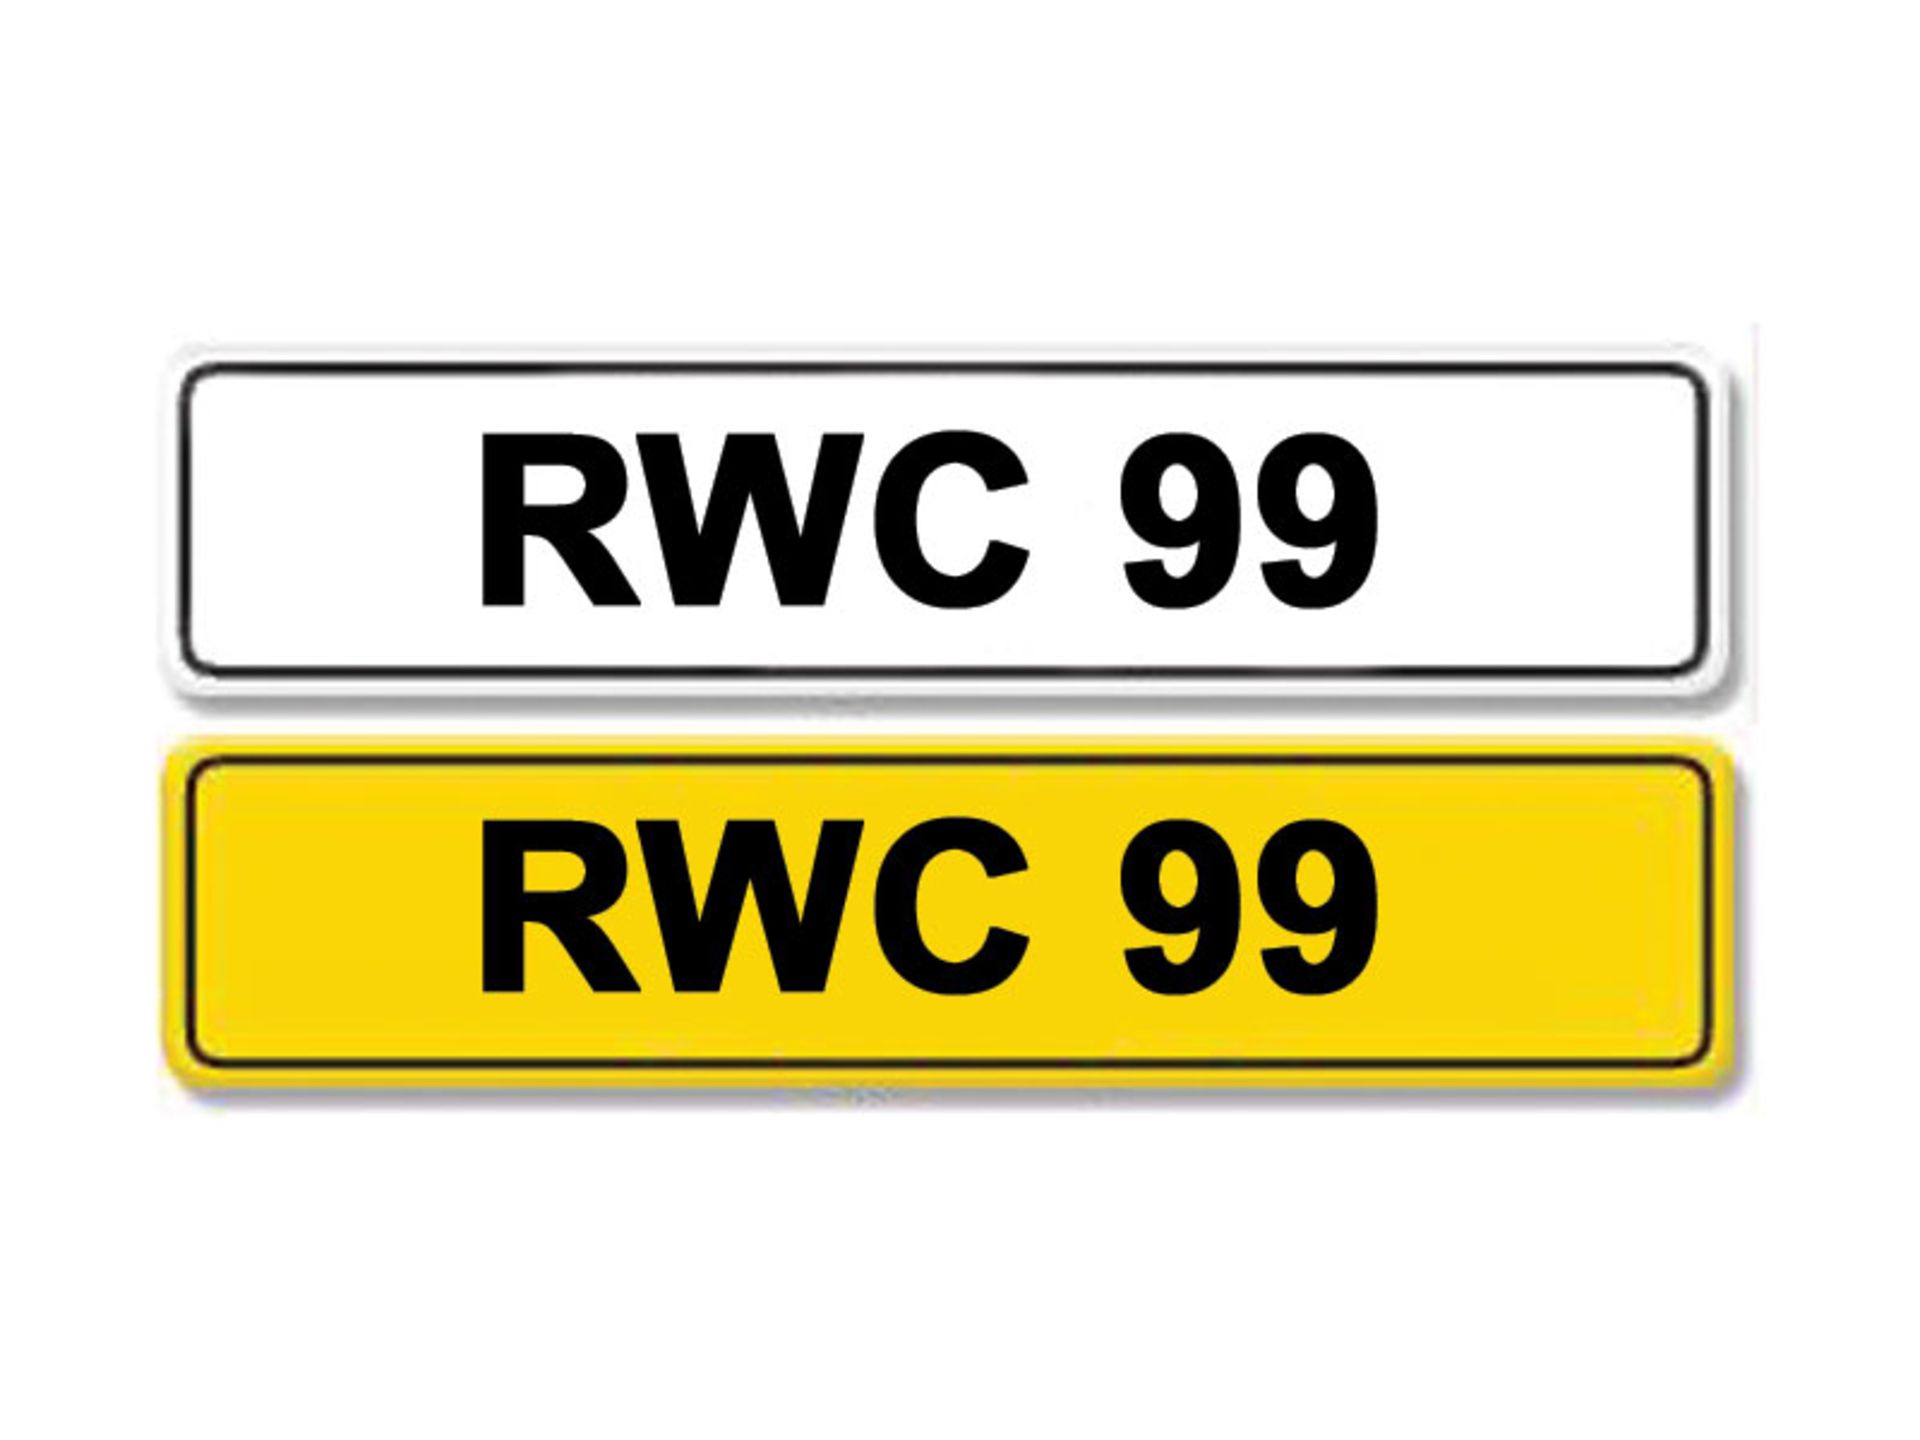 Registration Number RWC 99